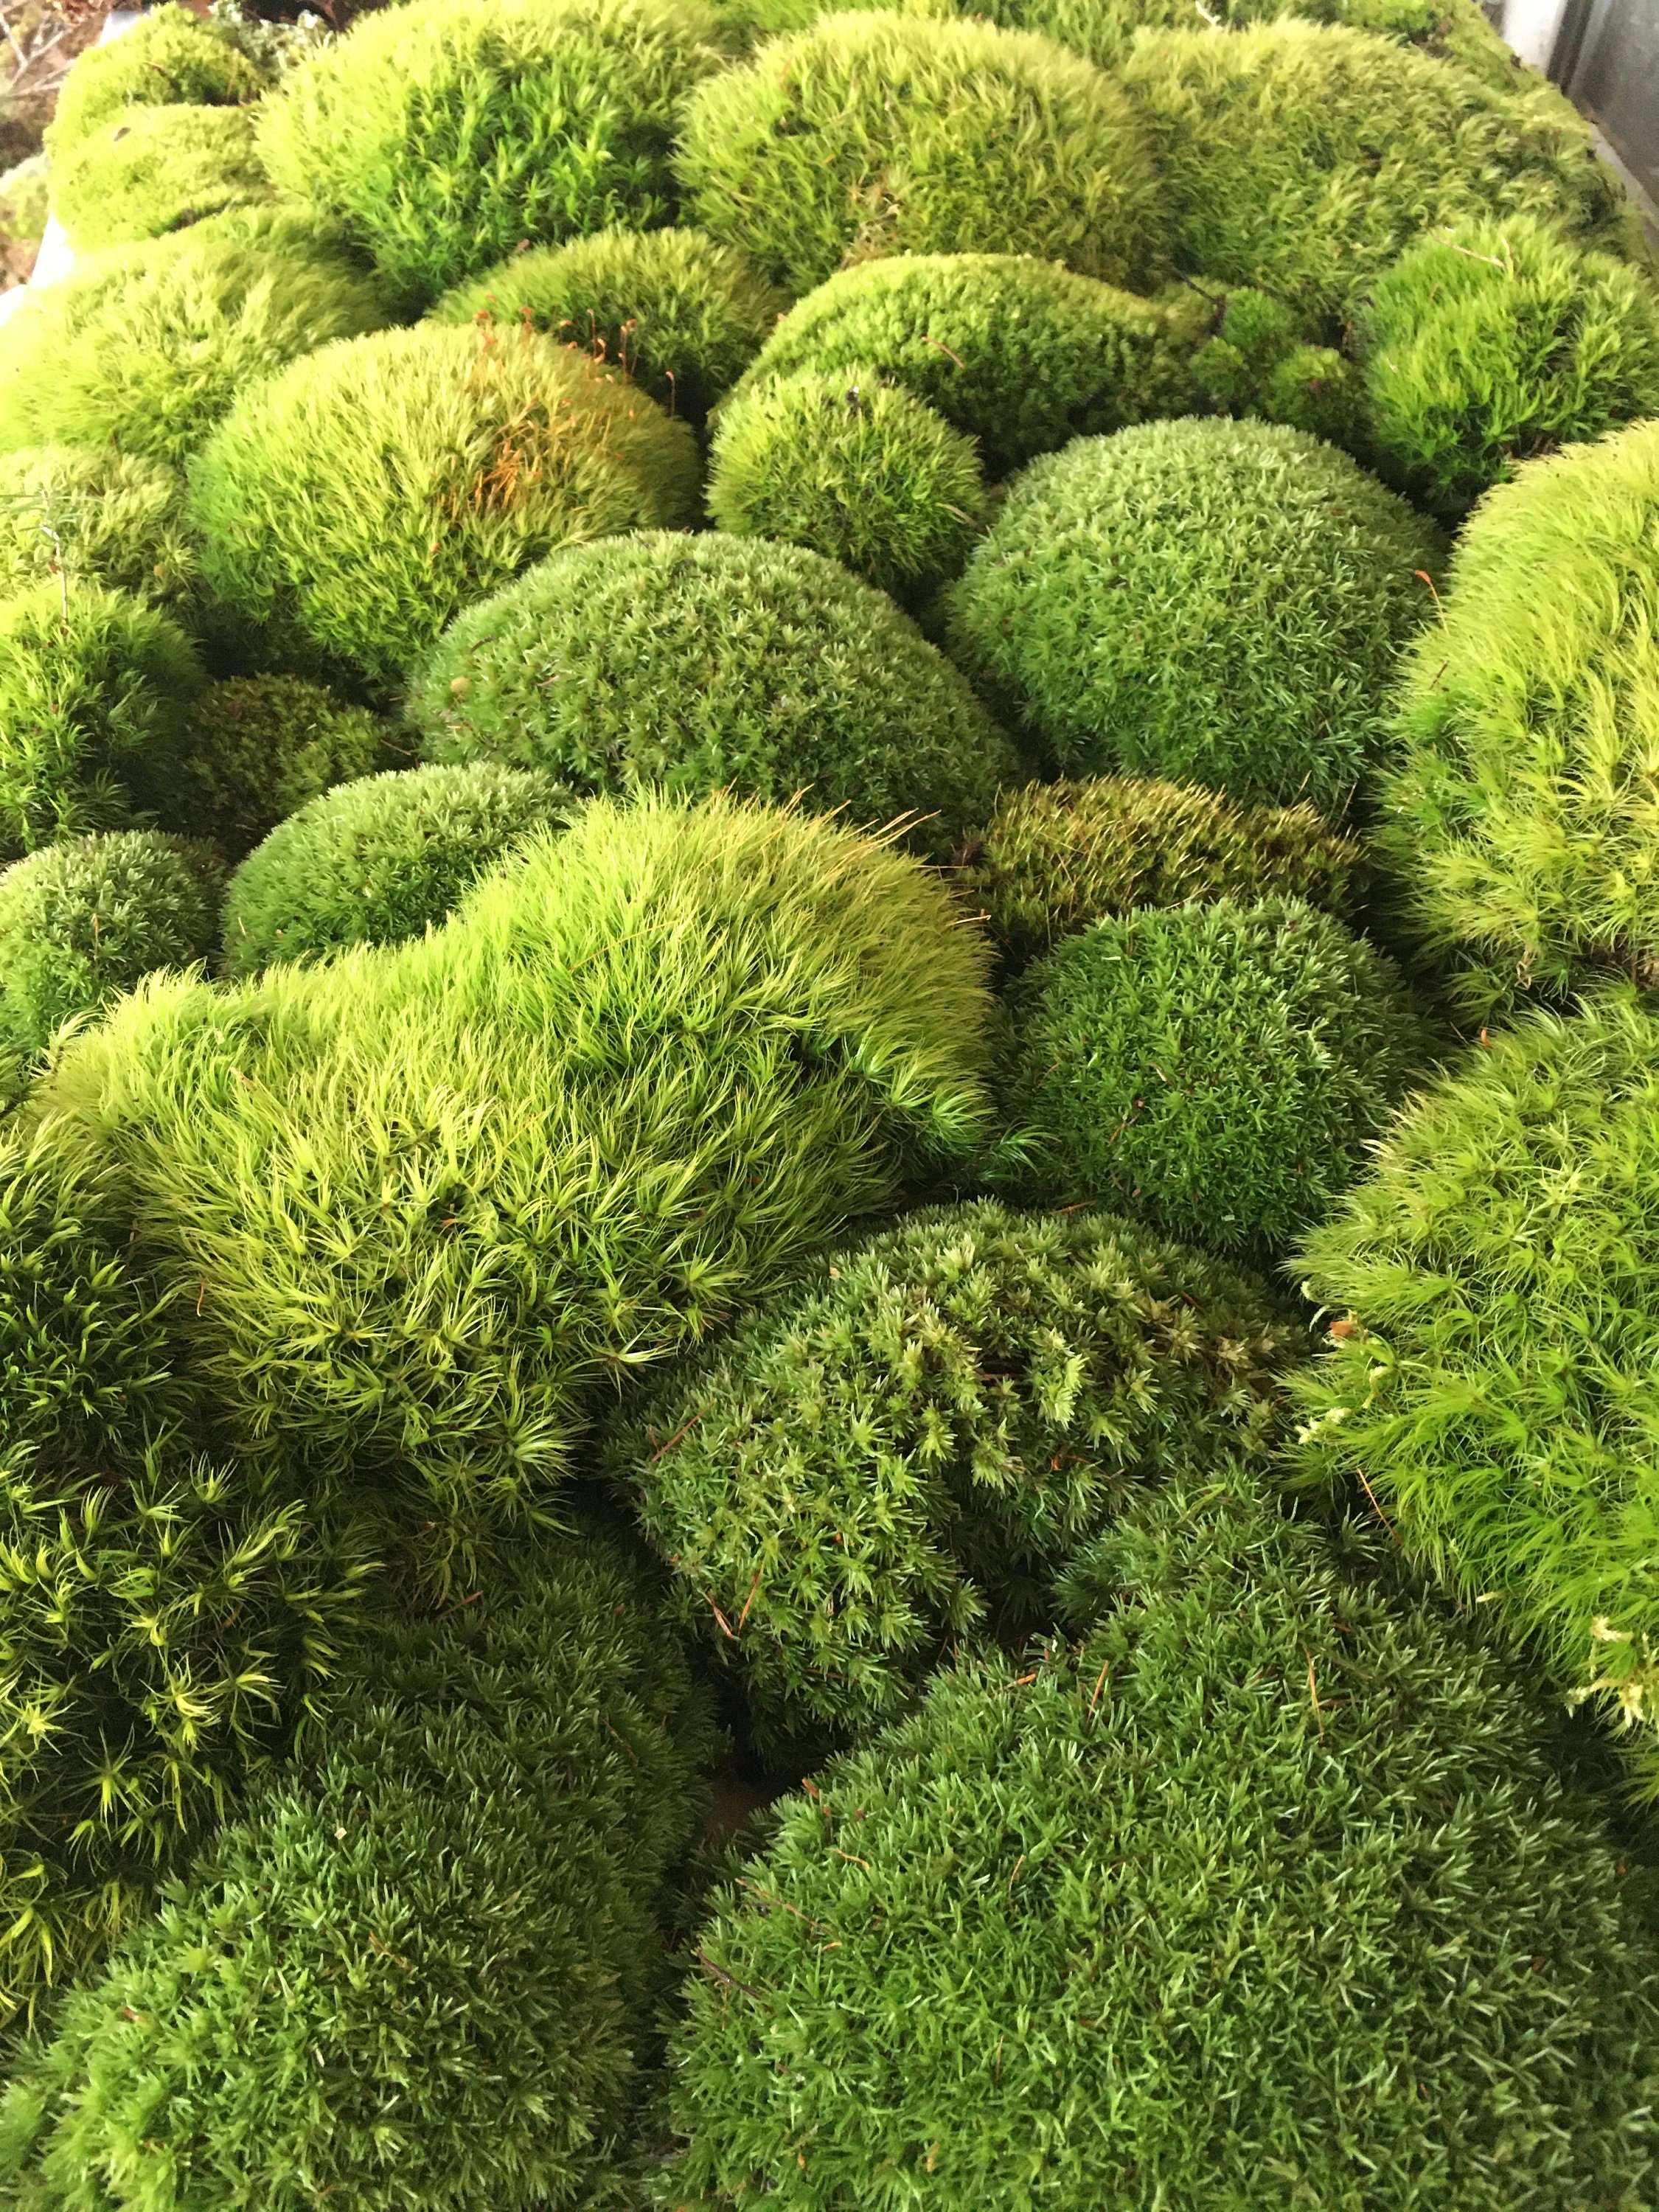 Terrarium moss, Live moss and lichen for your terrarium creation. Fresh,  organic mix of moss and lichen